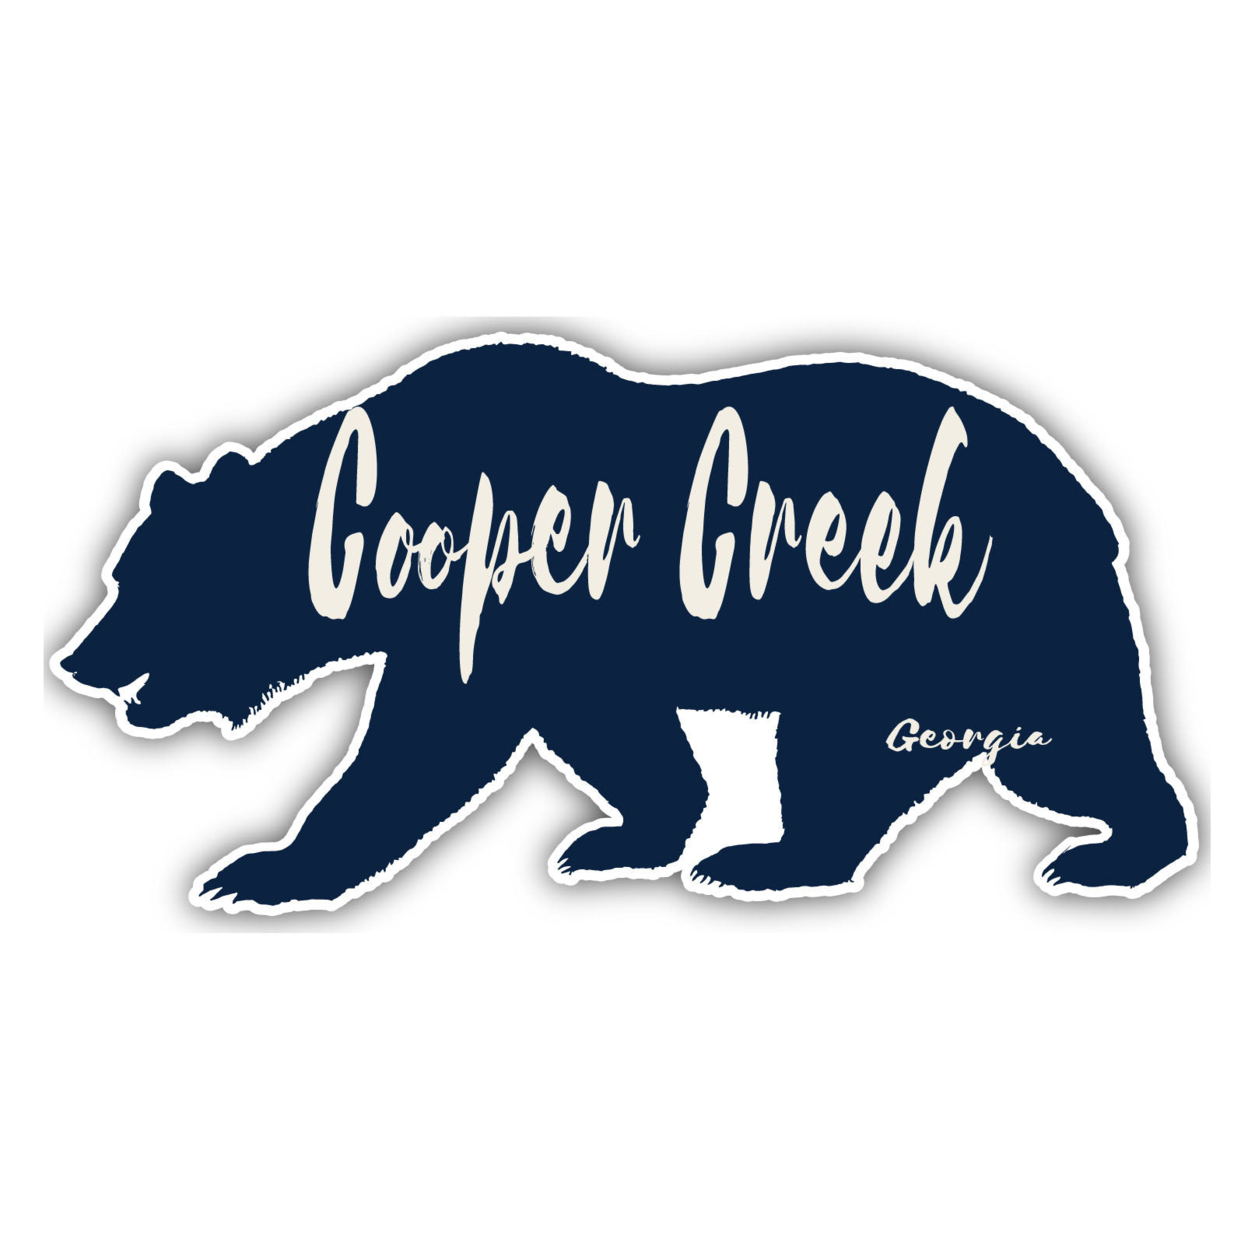 Cooper Creek Georgia Souvenir Decorative Stickers (Choose Theme And Size) - 4-Pack, 12-Inch, Bear